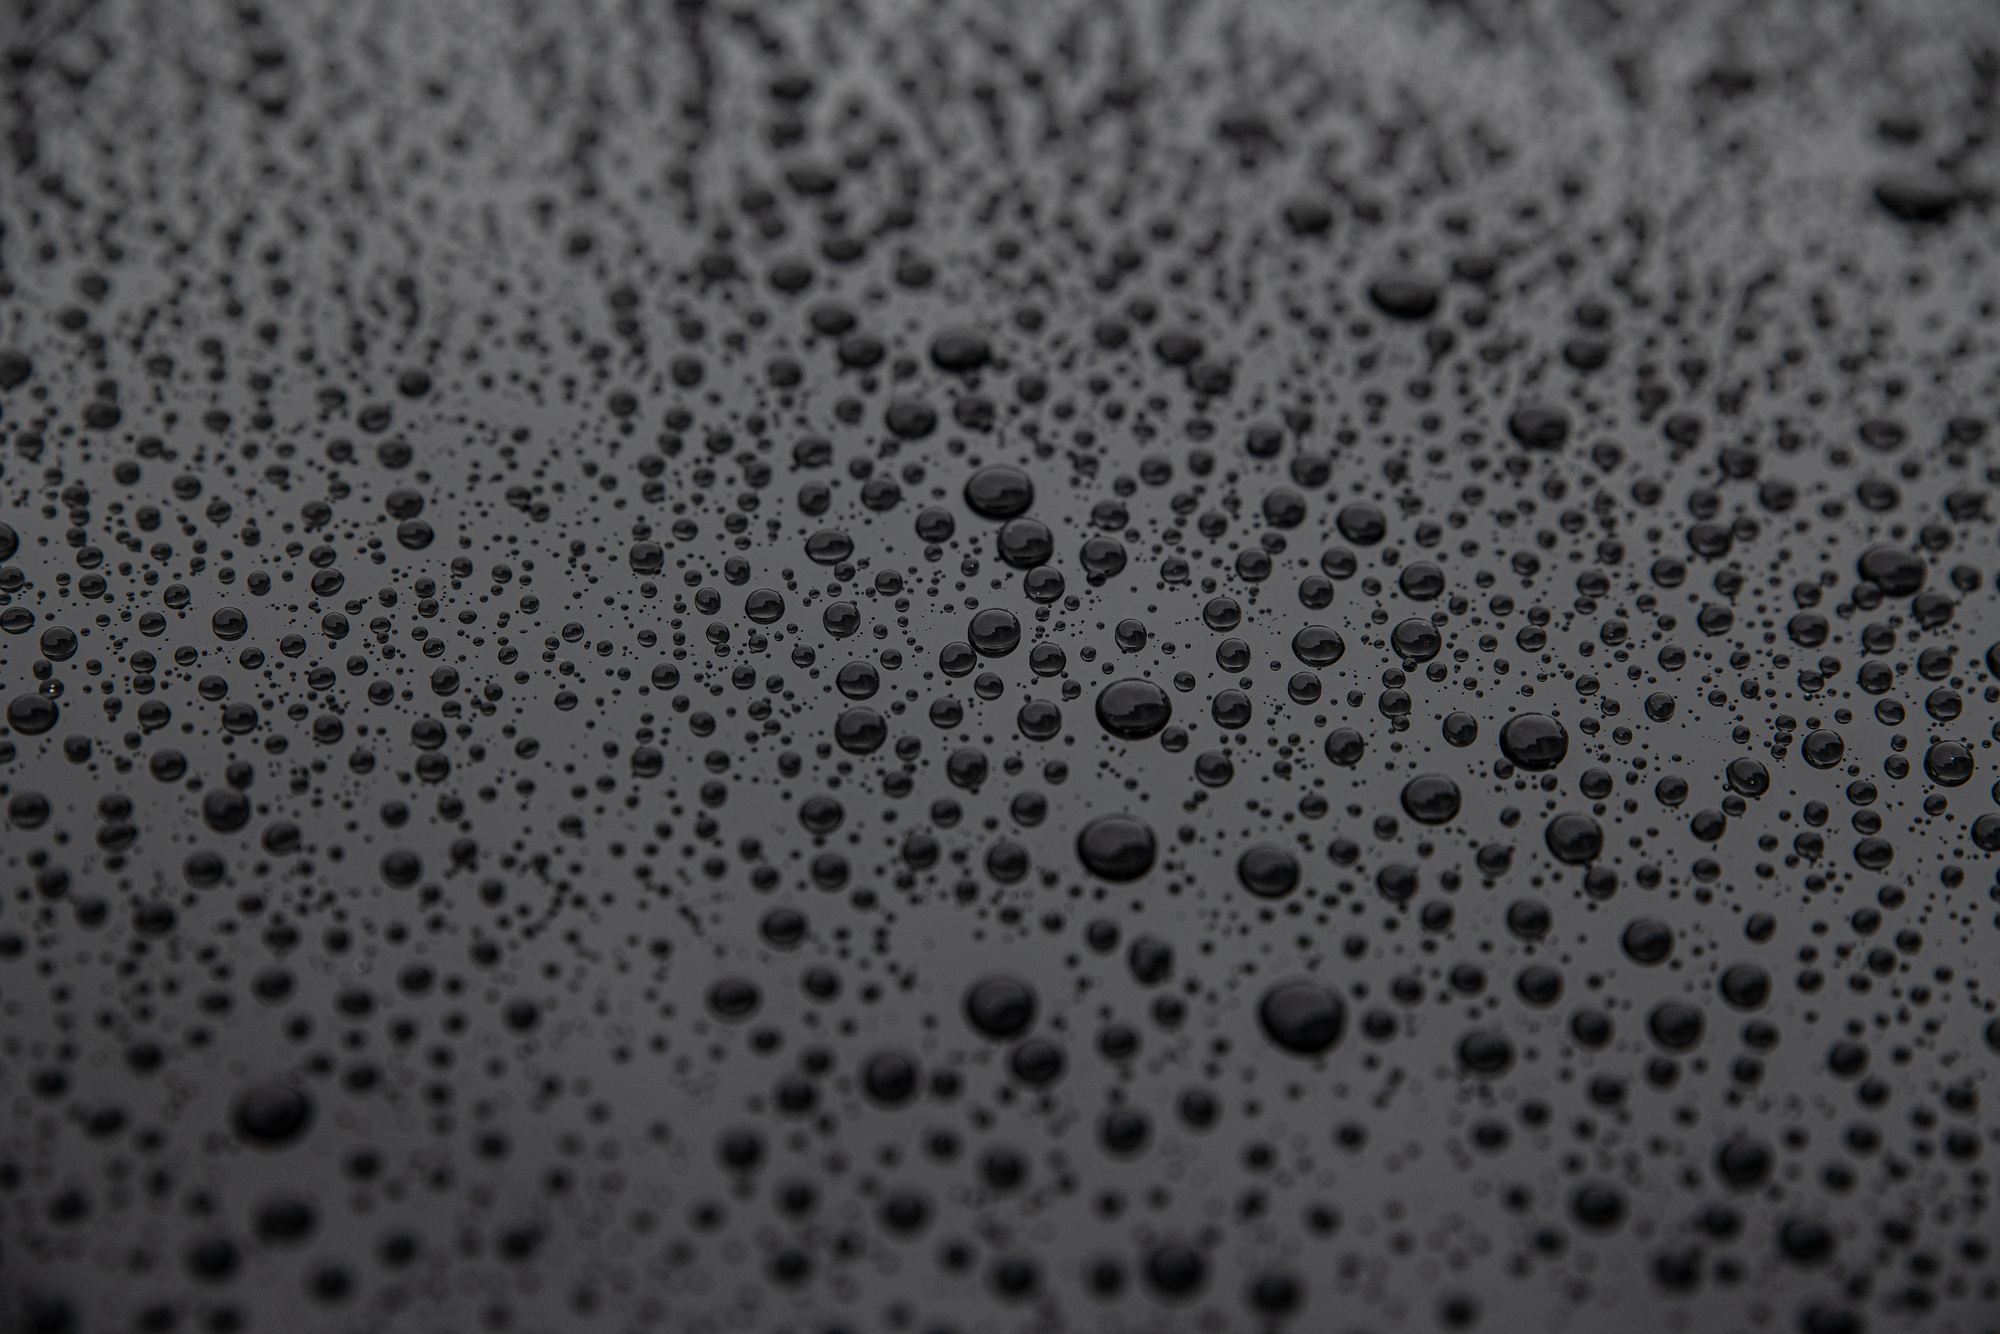 Hydrophobic effect on car varnish after using ceramic coating.